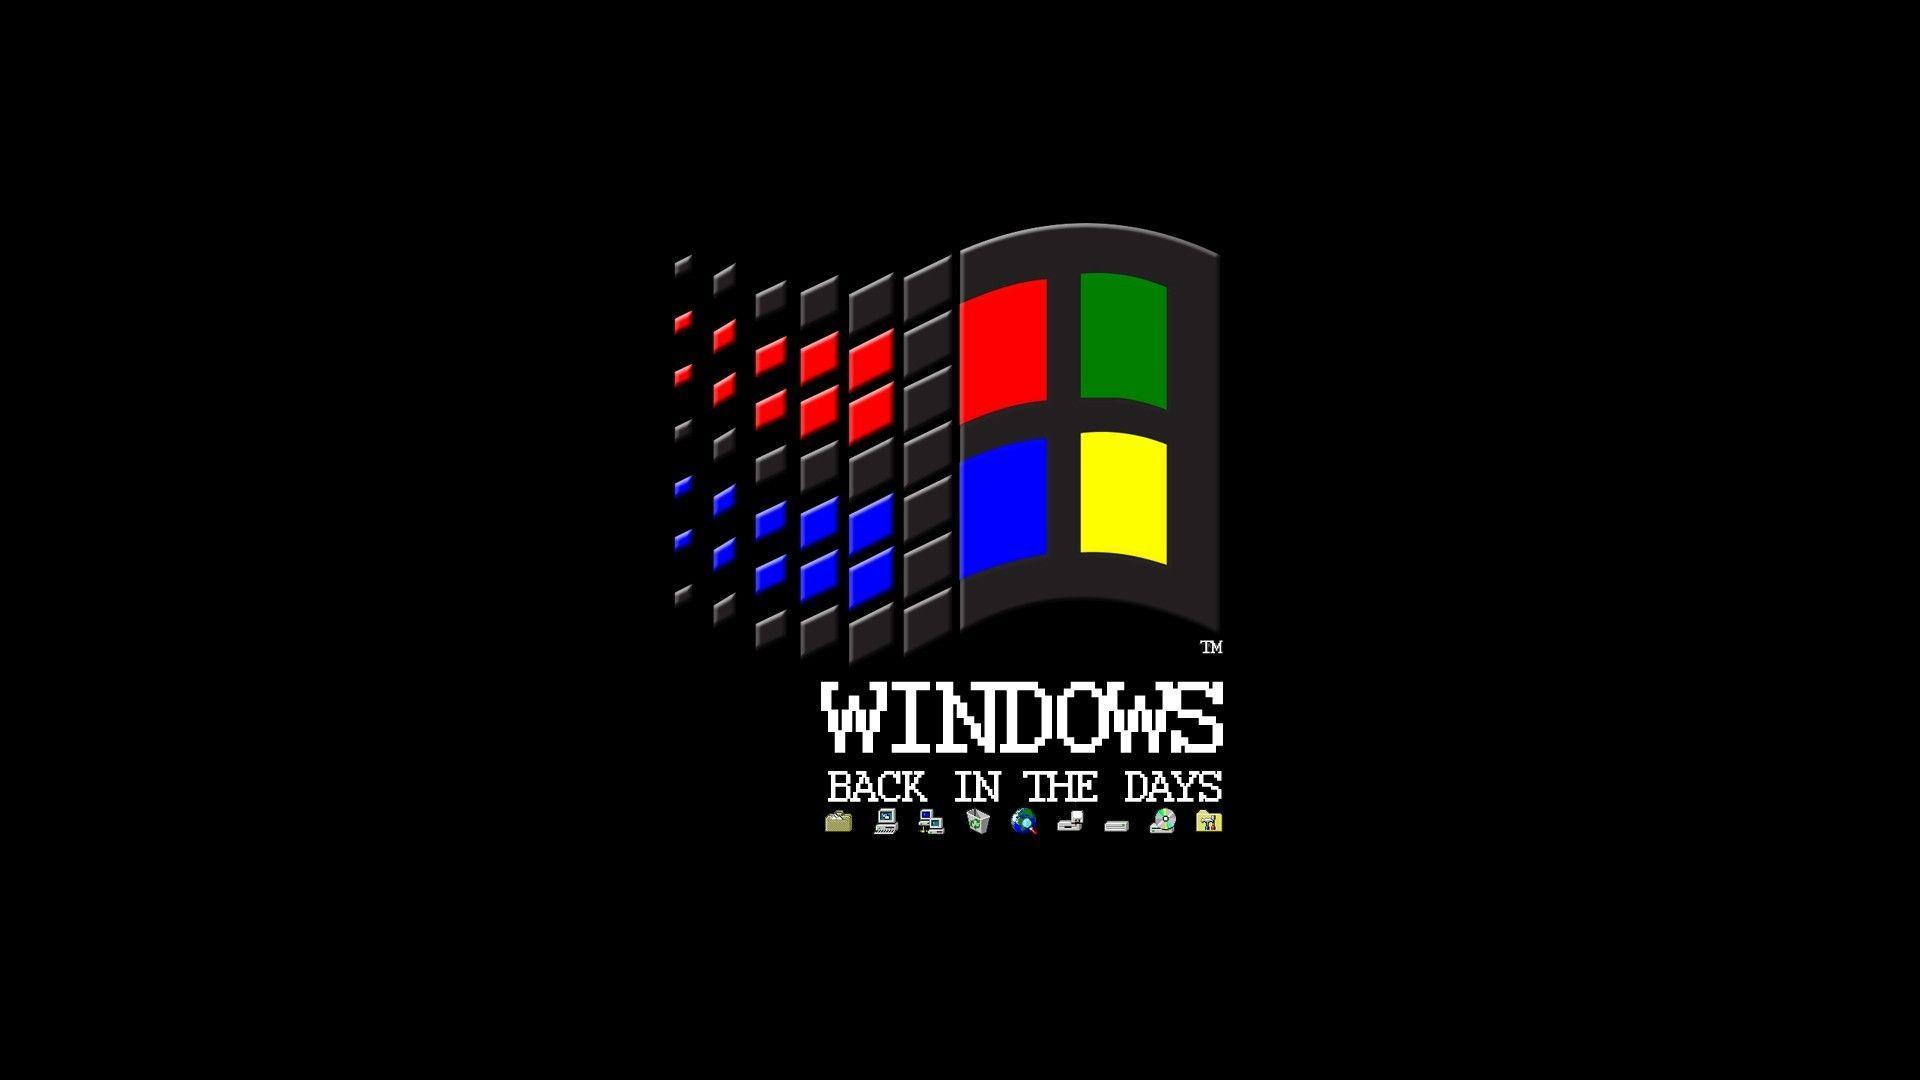 MS-DOS Logo - Black Background, Floppy Disk, MS DOS, Internet, Microsoft Windows